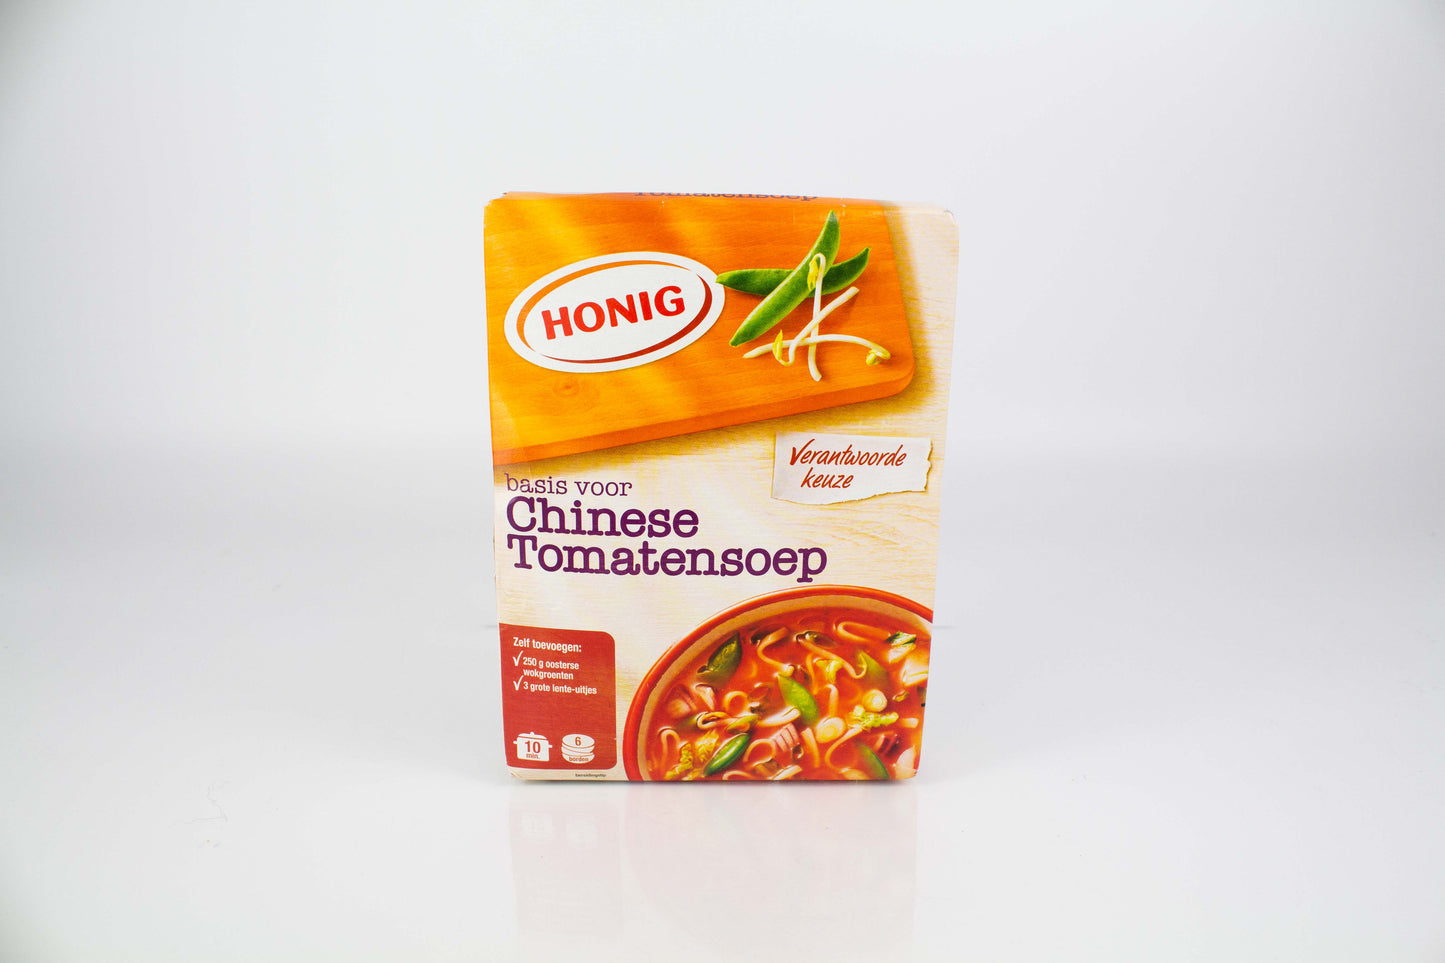 Honig Chinese Tomato Soup